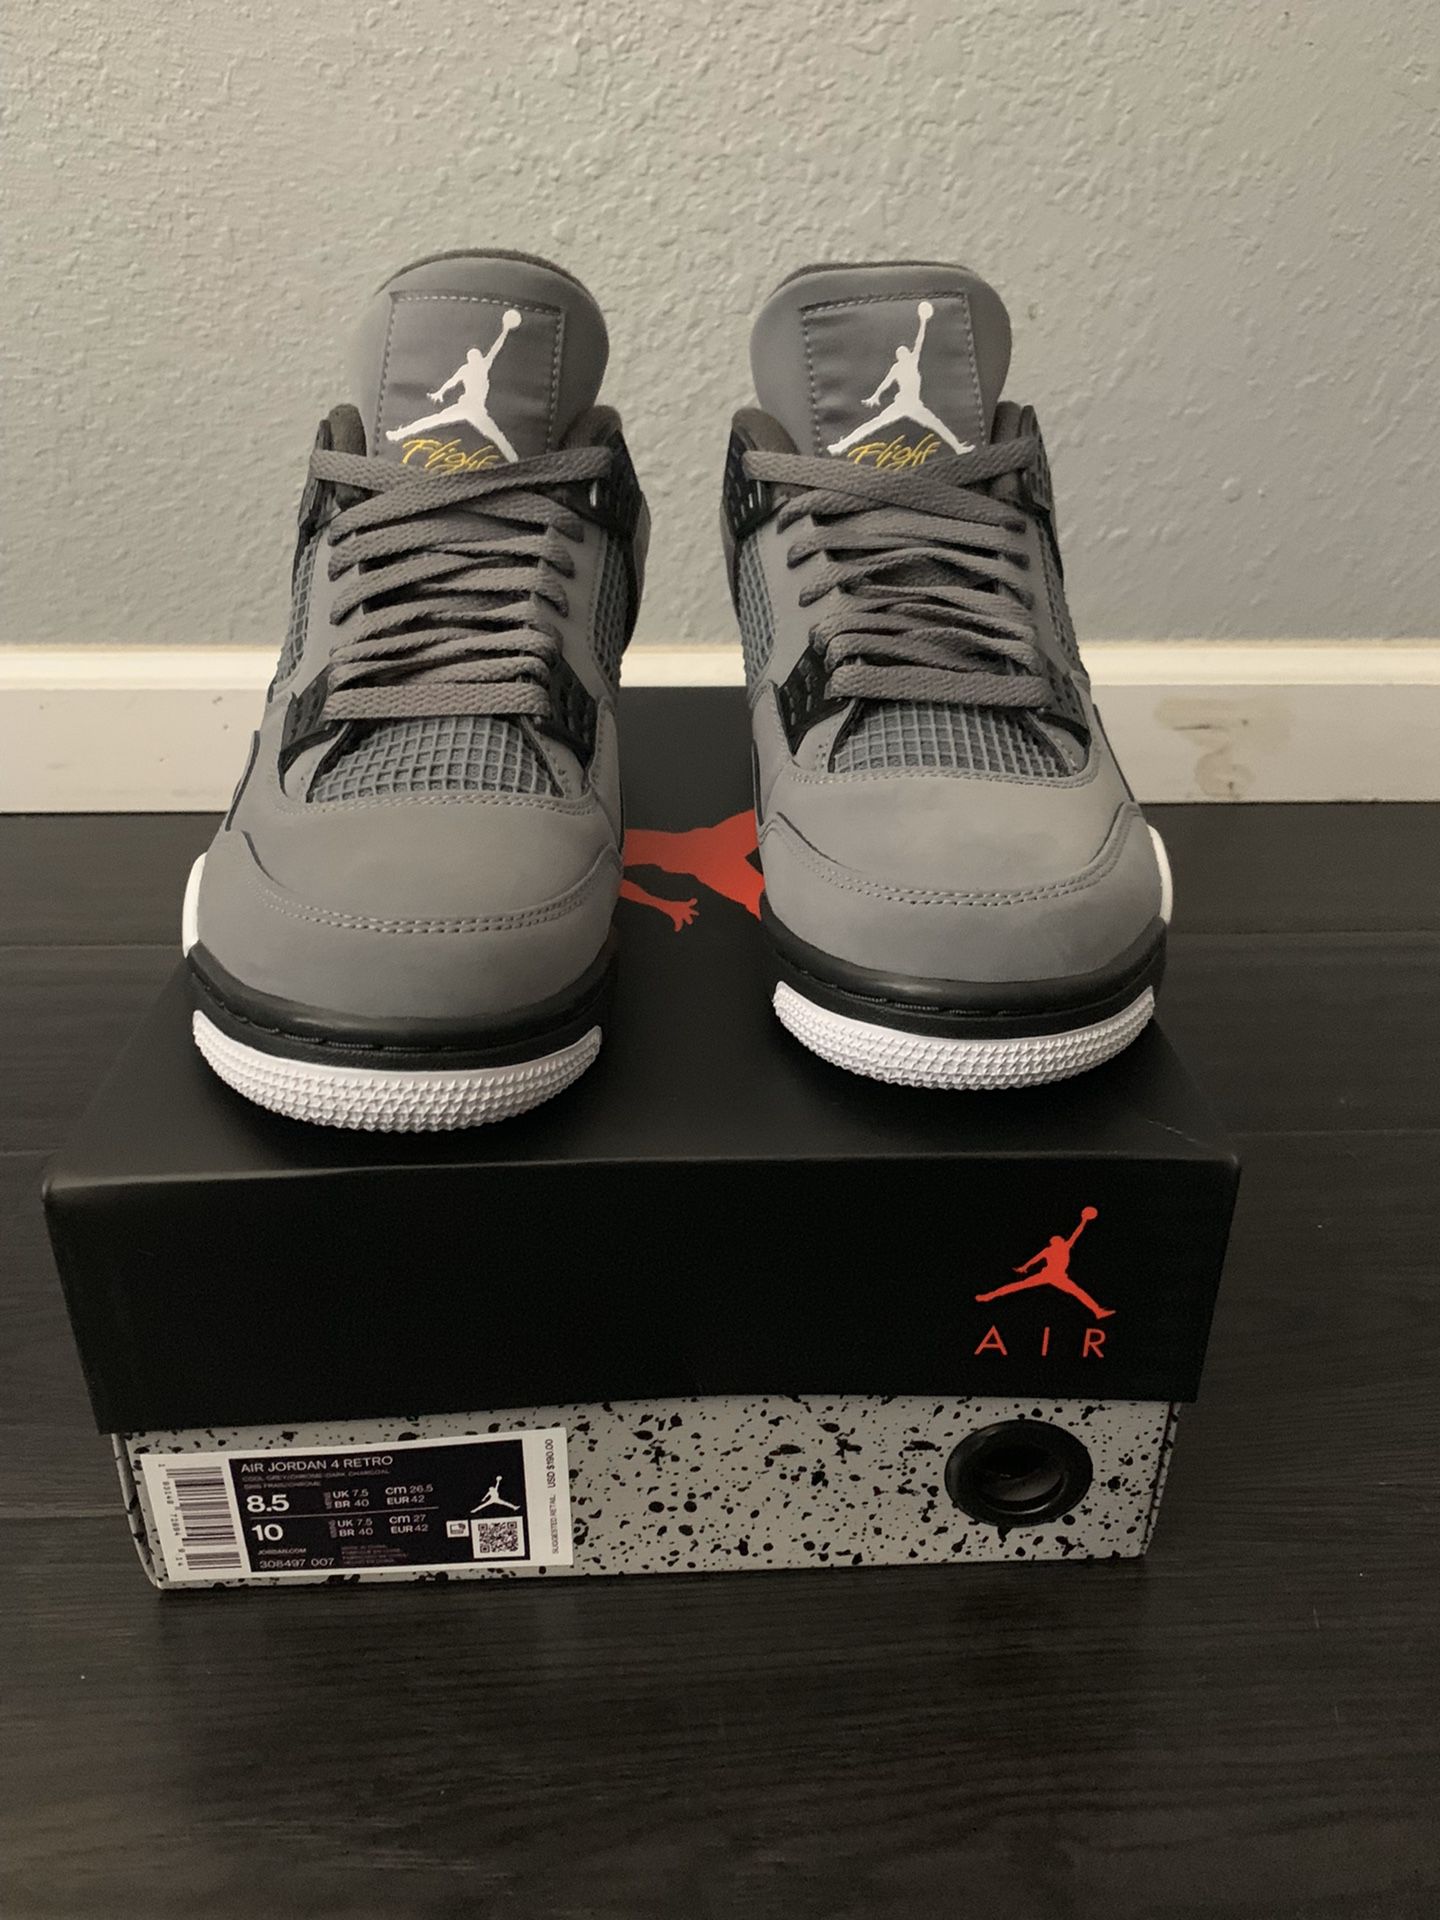 Jordan 4 cool grey 8.5 brand new.. NO TRADES FIRM ON PRICE